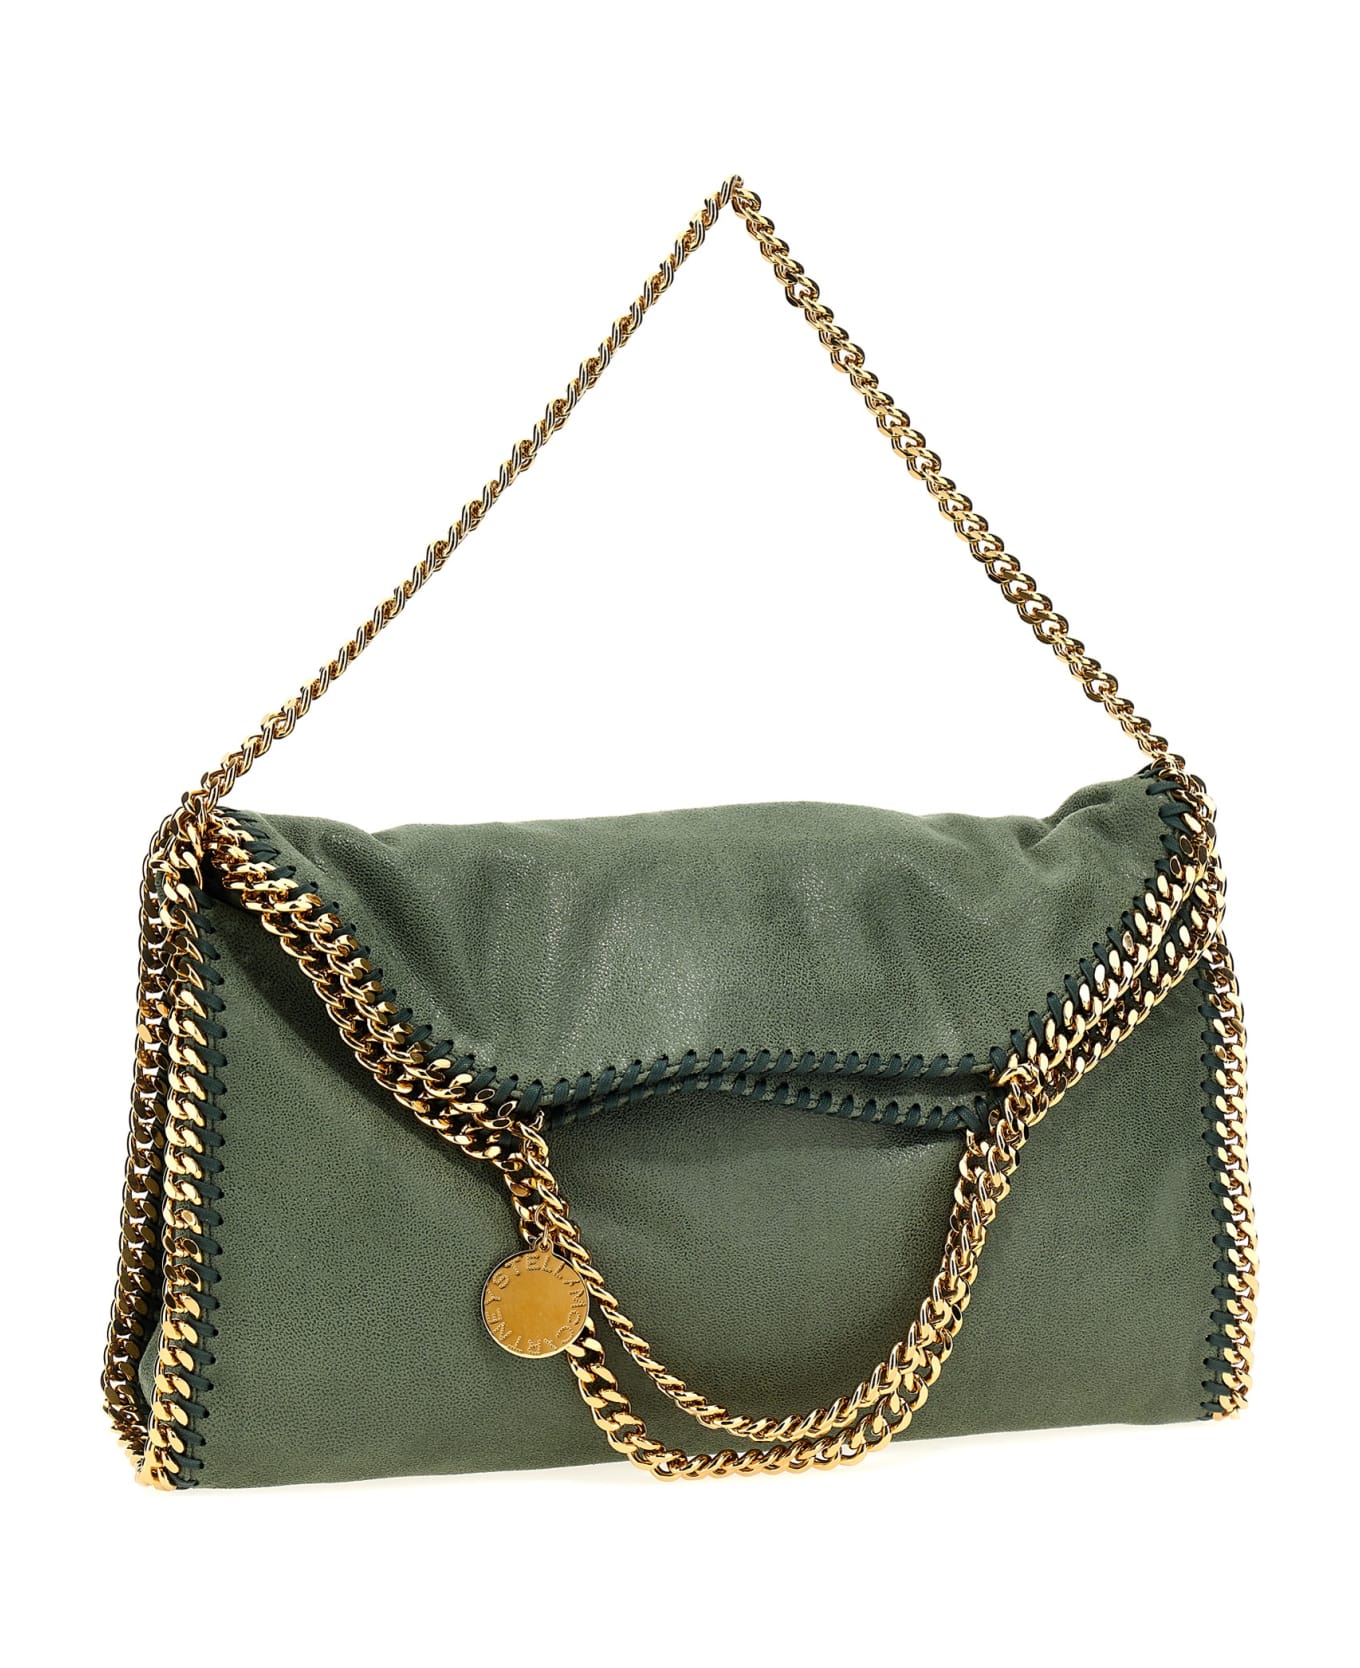 Stella McCartney Falabella 3 Chain Handbag - Stone Green